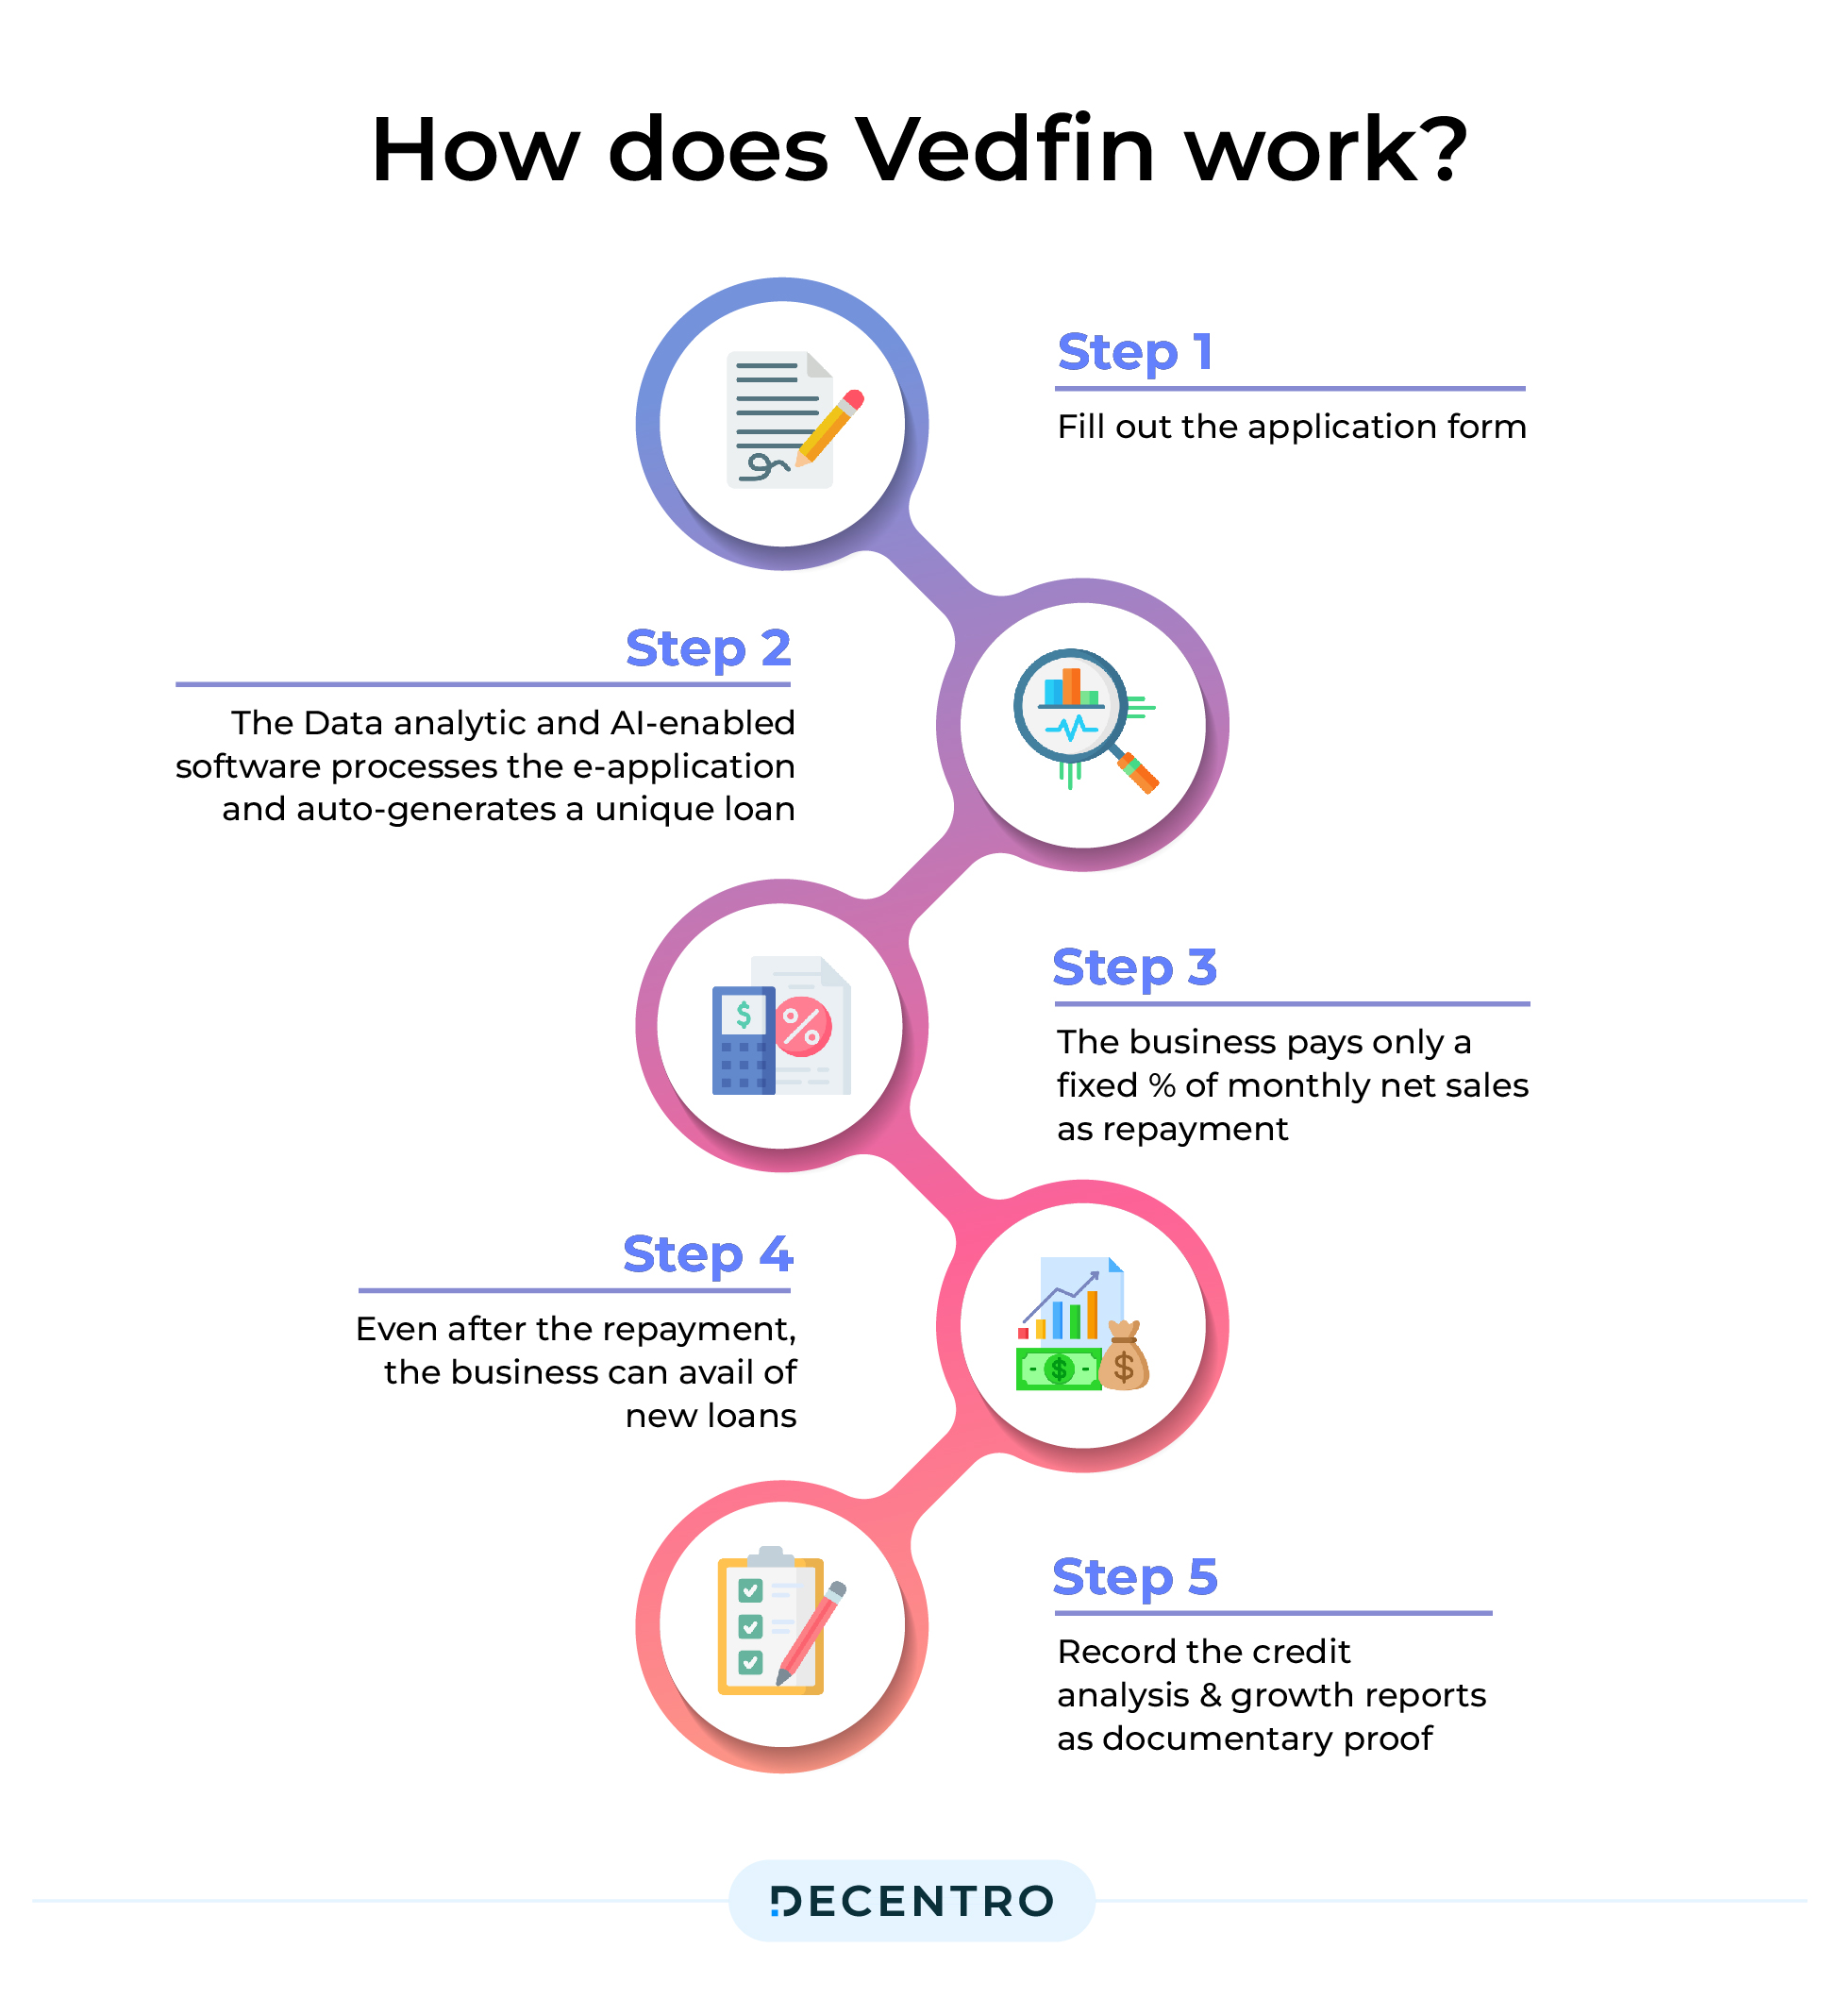 Vedfin workflow